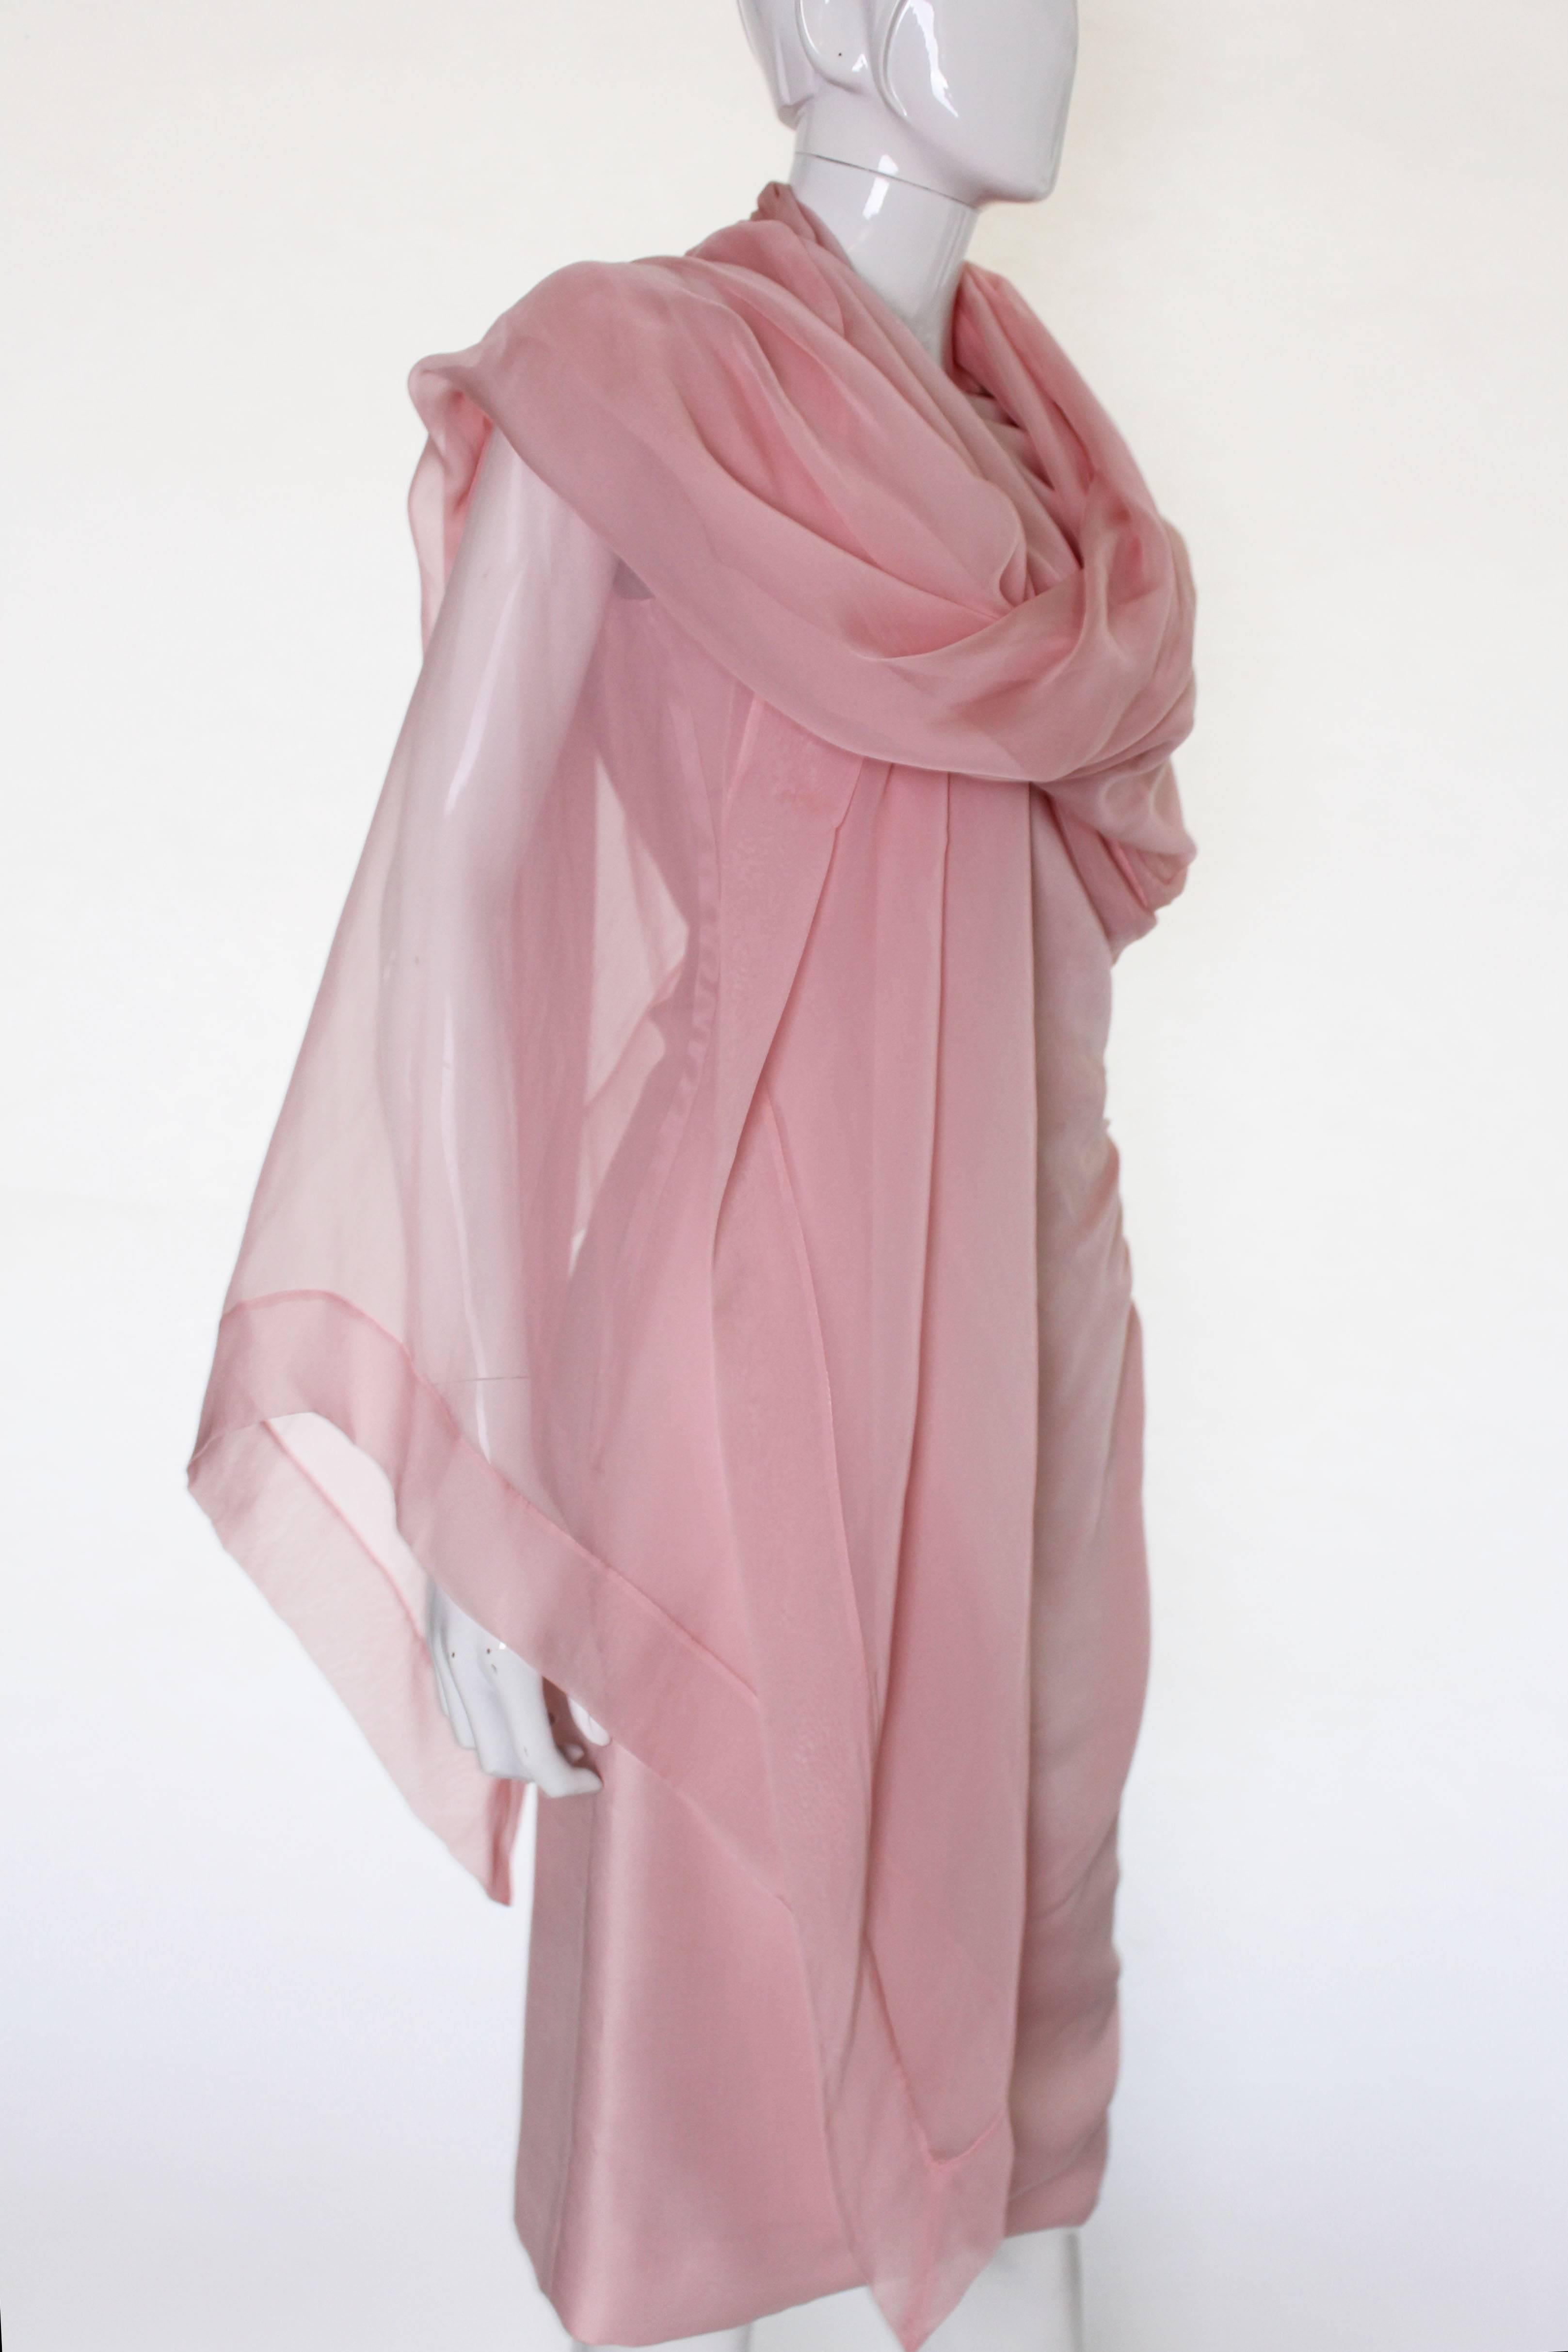 Beige Mid 2000s Valentino Blush Pink Asymmetric Cocktail Dress